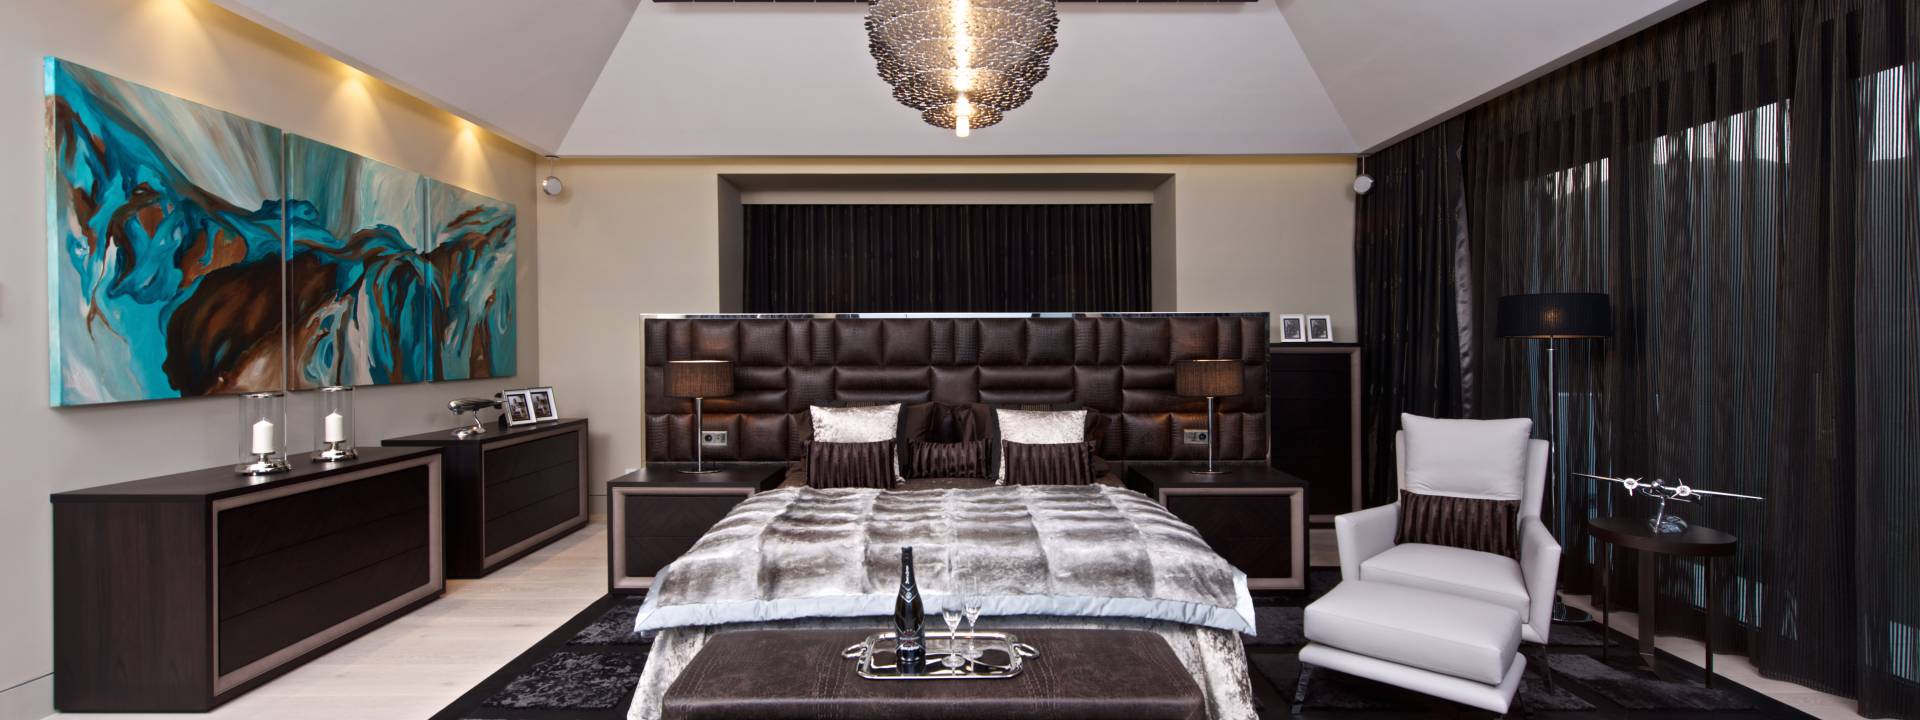 Contemporary Holiday Villa. Exquisite master bedroom. Taylor interiors.